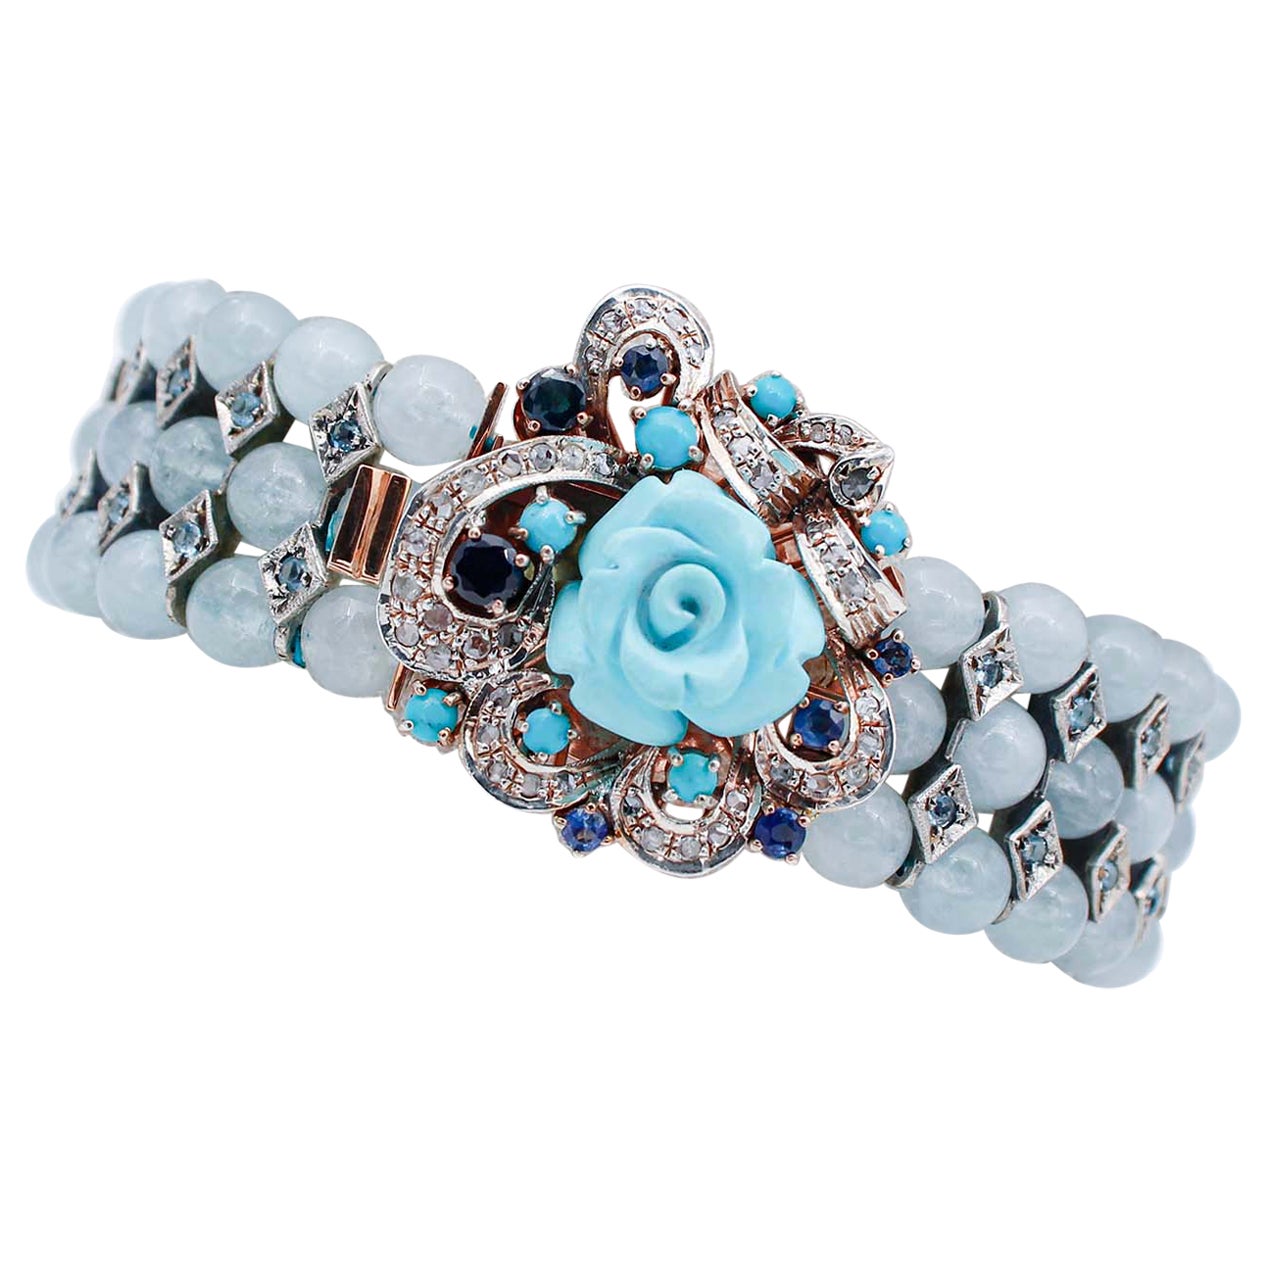 Aquamarine, Turquoise, Diamonds, Sapphires, 14 Kt Rose Gold and Silver Bracelet